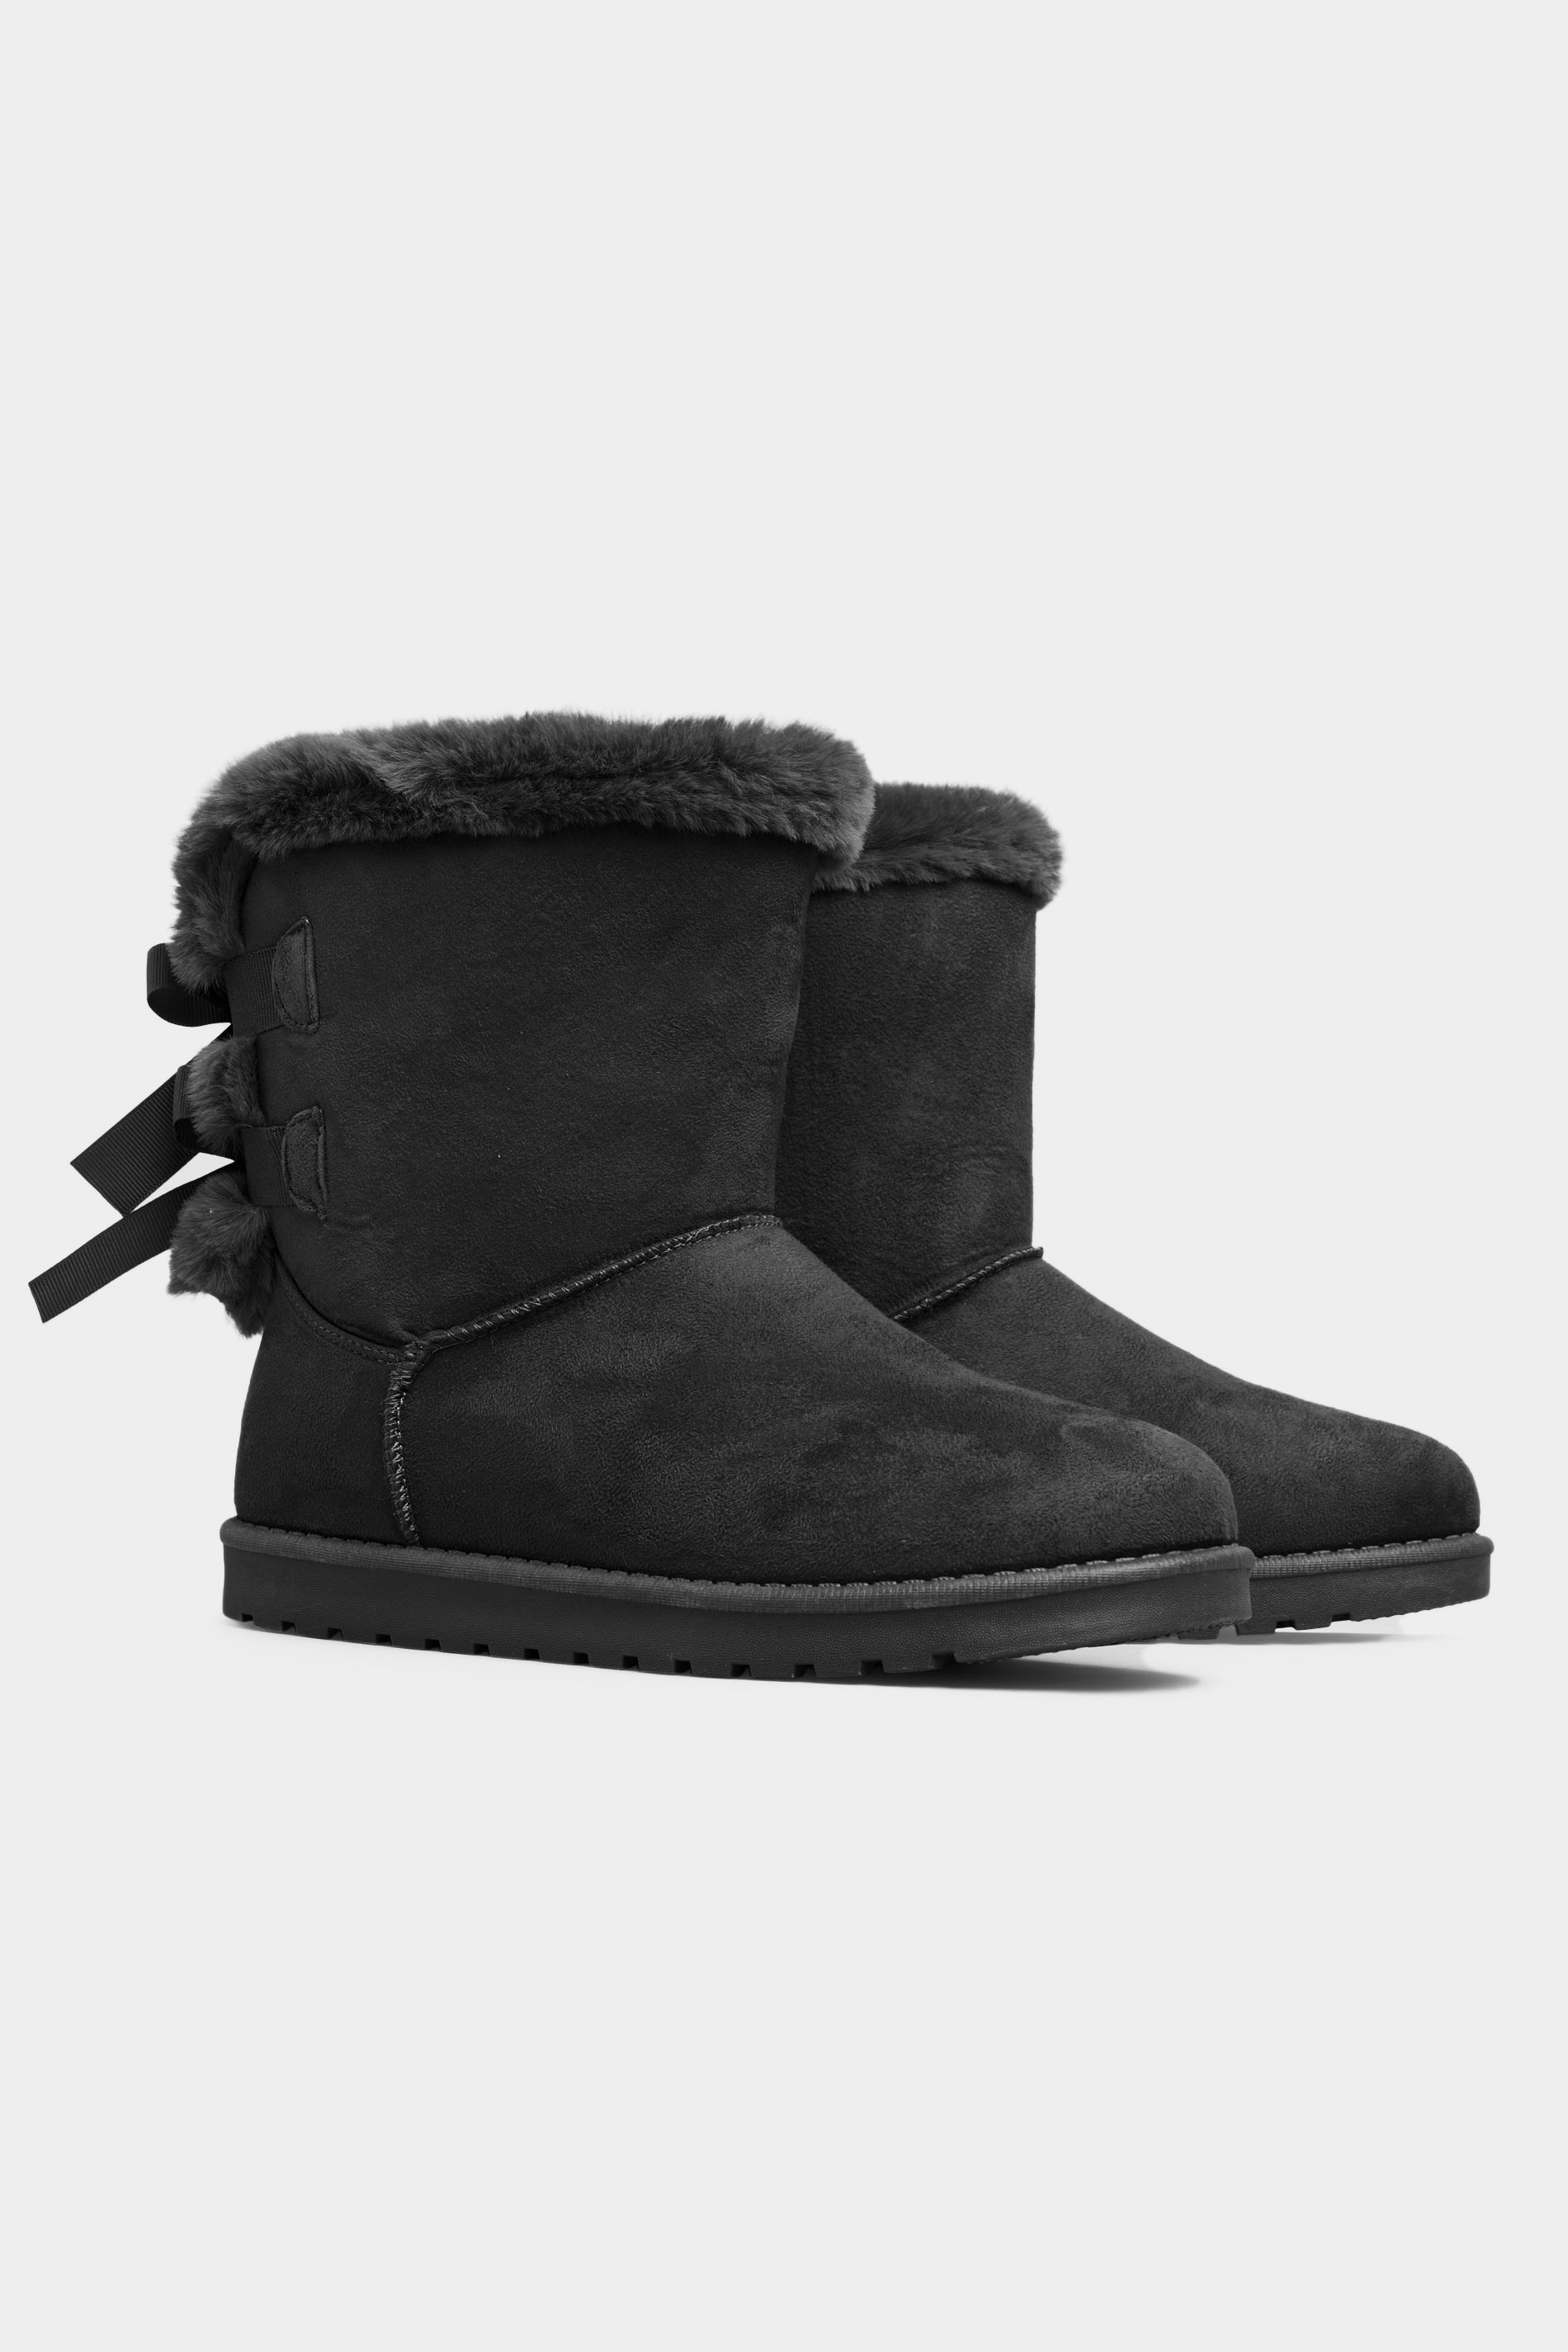 Black Vegan Suede Bow Detail Boots In Extra Wide EEE Fit_B.jpg